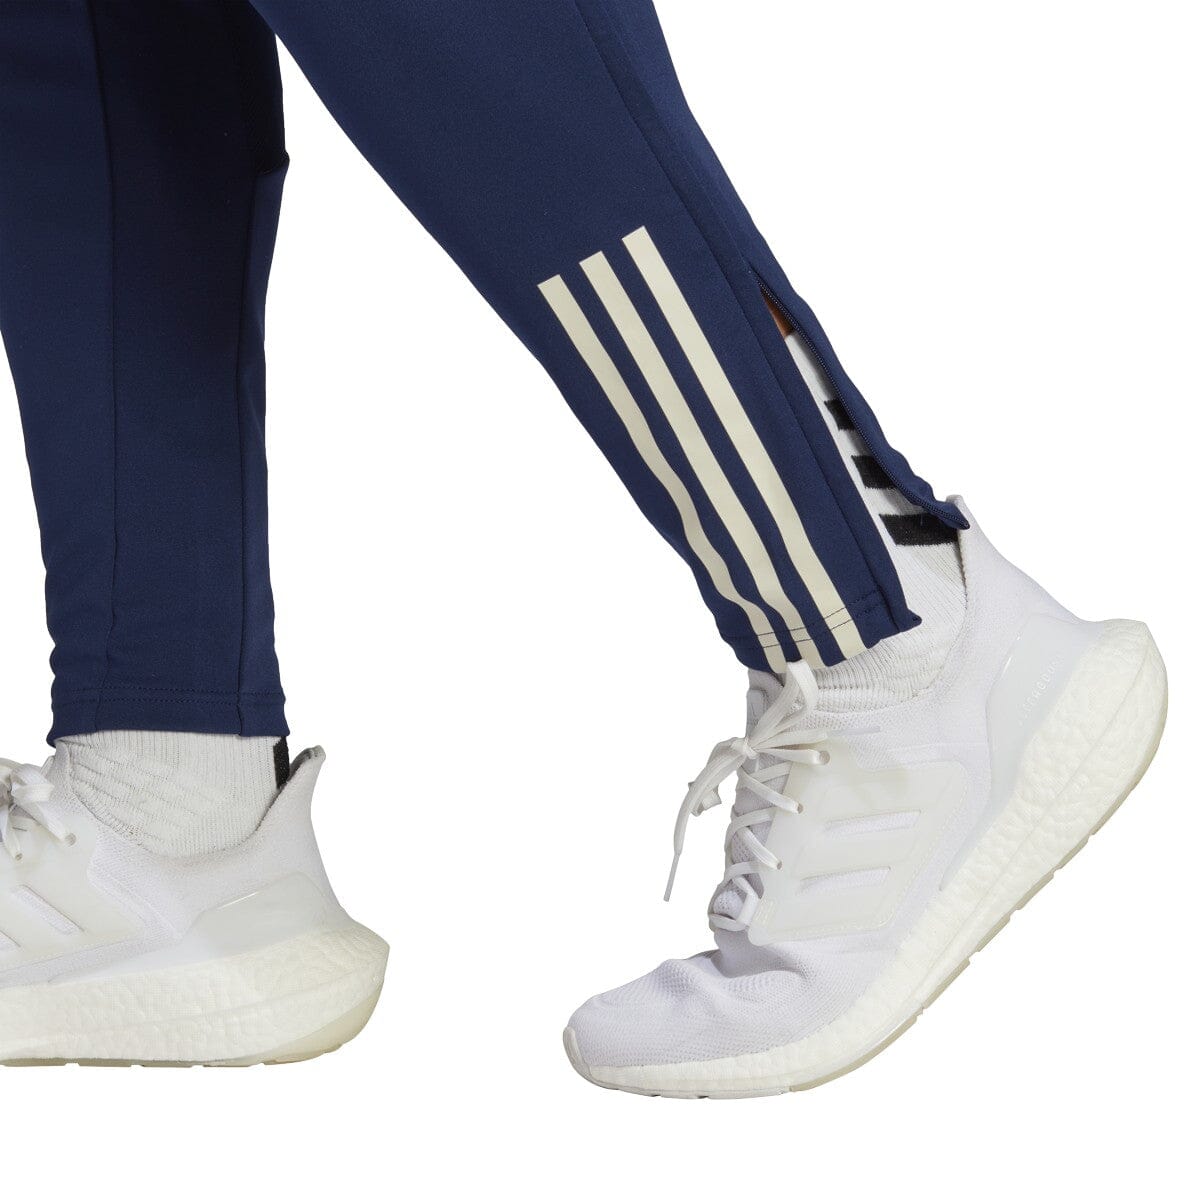 adidas Italy Tiro Training Pants Women - Dark Blue - Soccer Shop USA